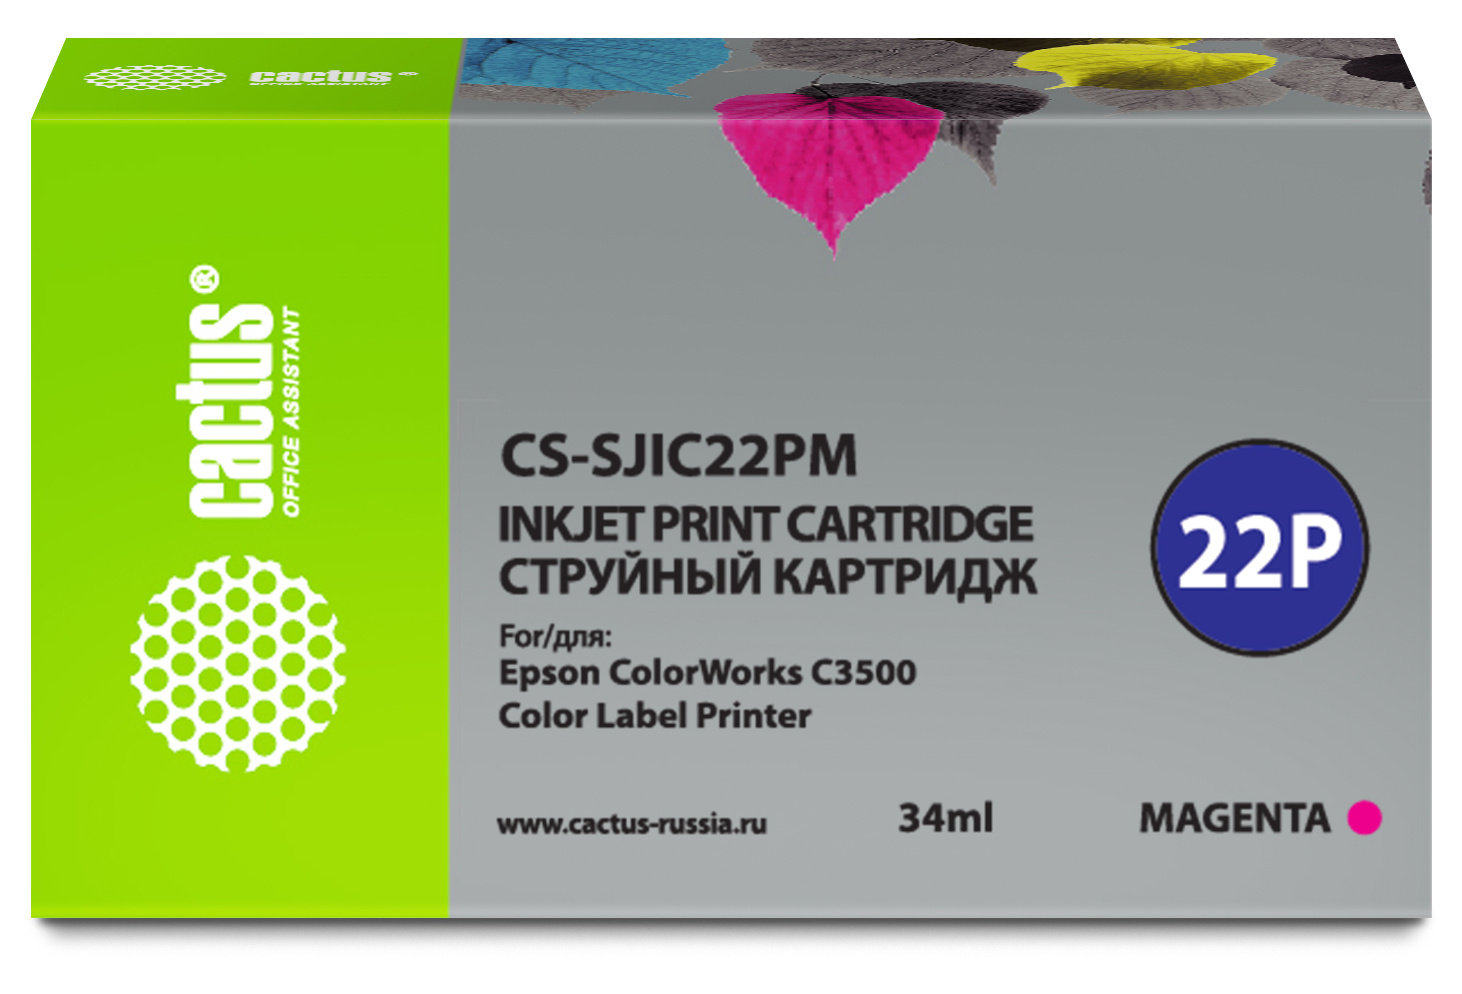   Cactus CS-SJIC22PM C33S020603  (34)  Epson ColorWorks C3500